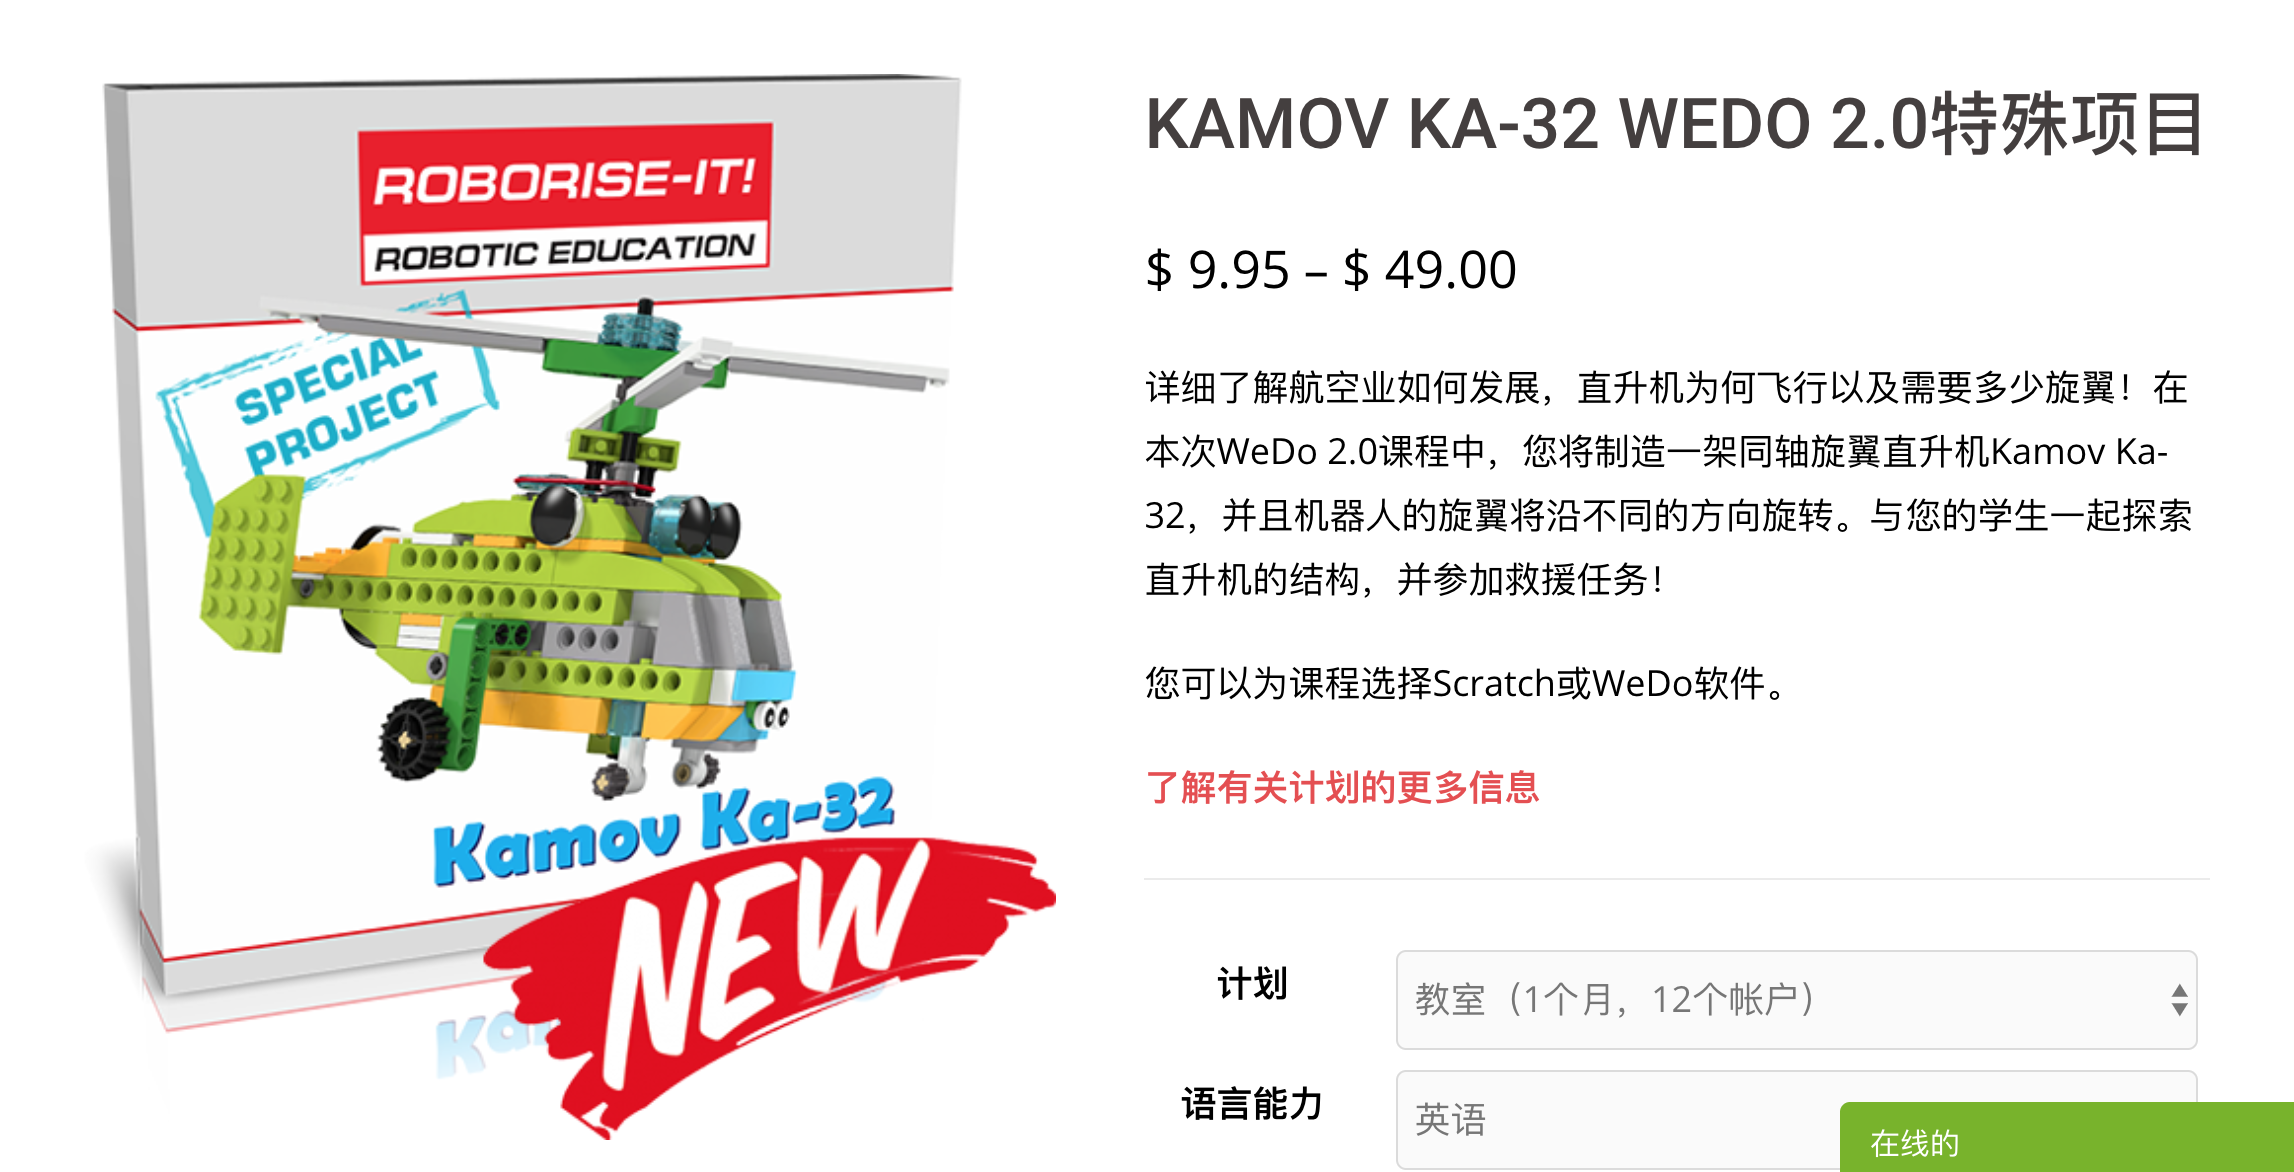 WEDO2.0 特别款  共轴双旋翼直升机